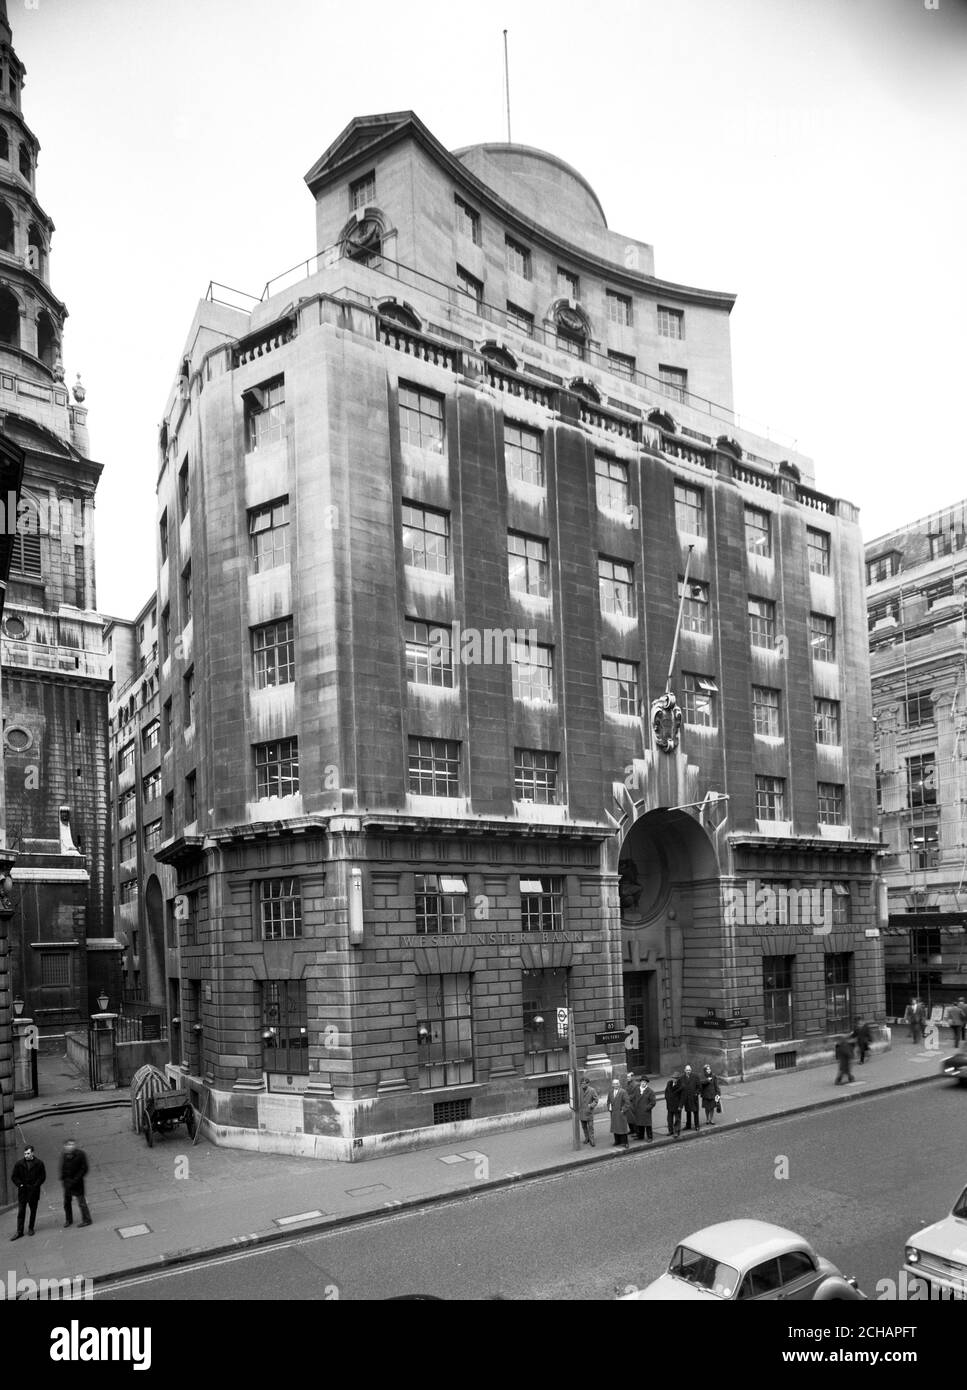 The Press Association building in Fleet Street, London Stock Photo - Alamy